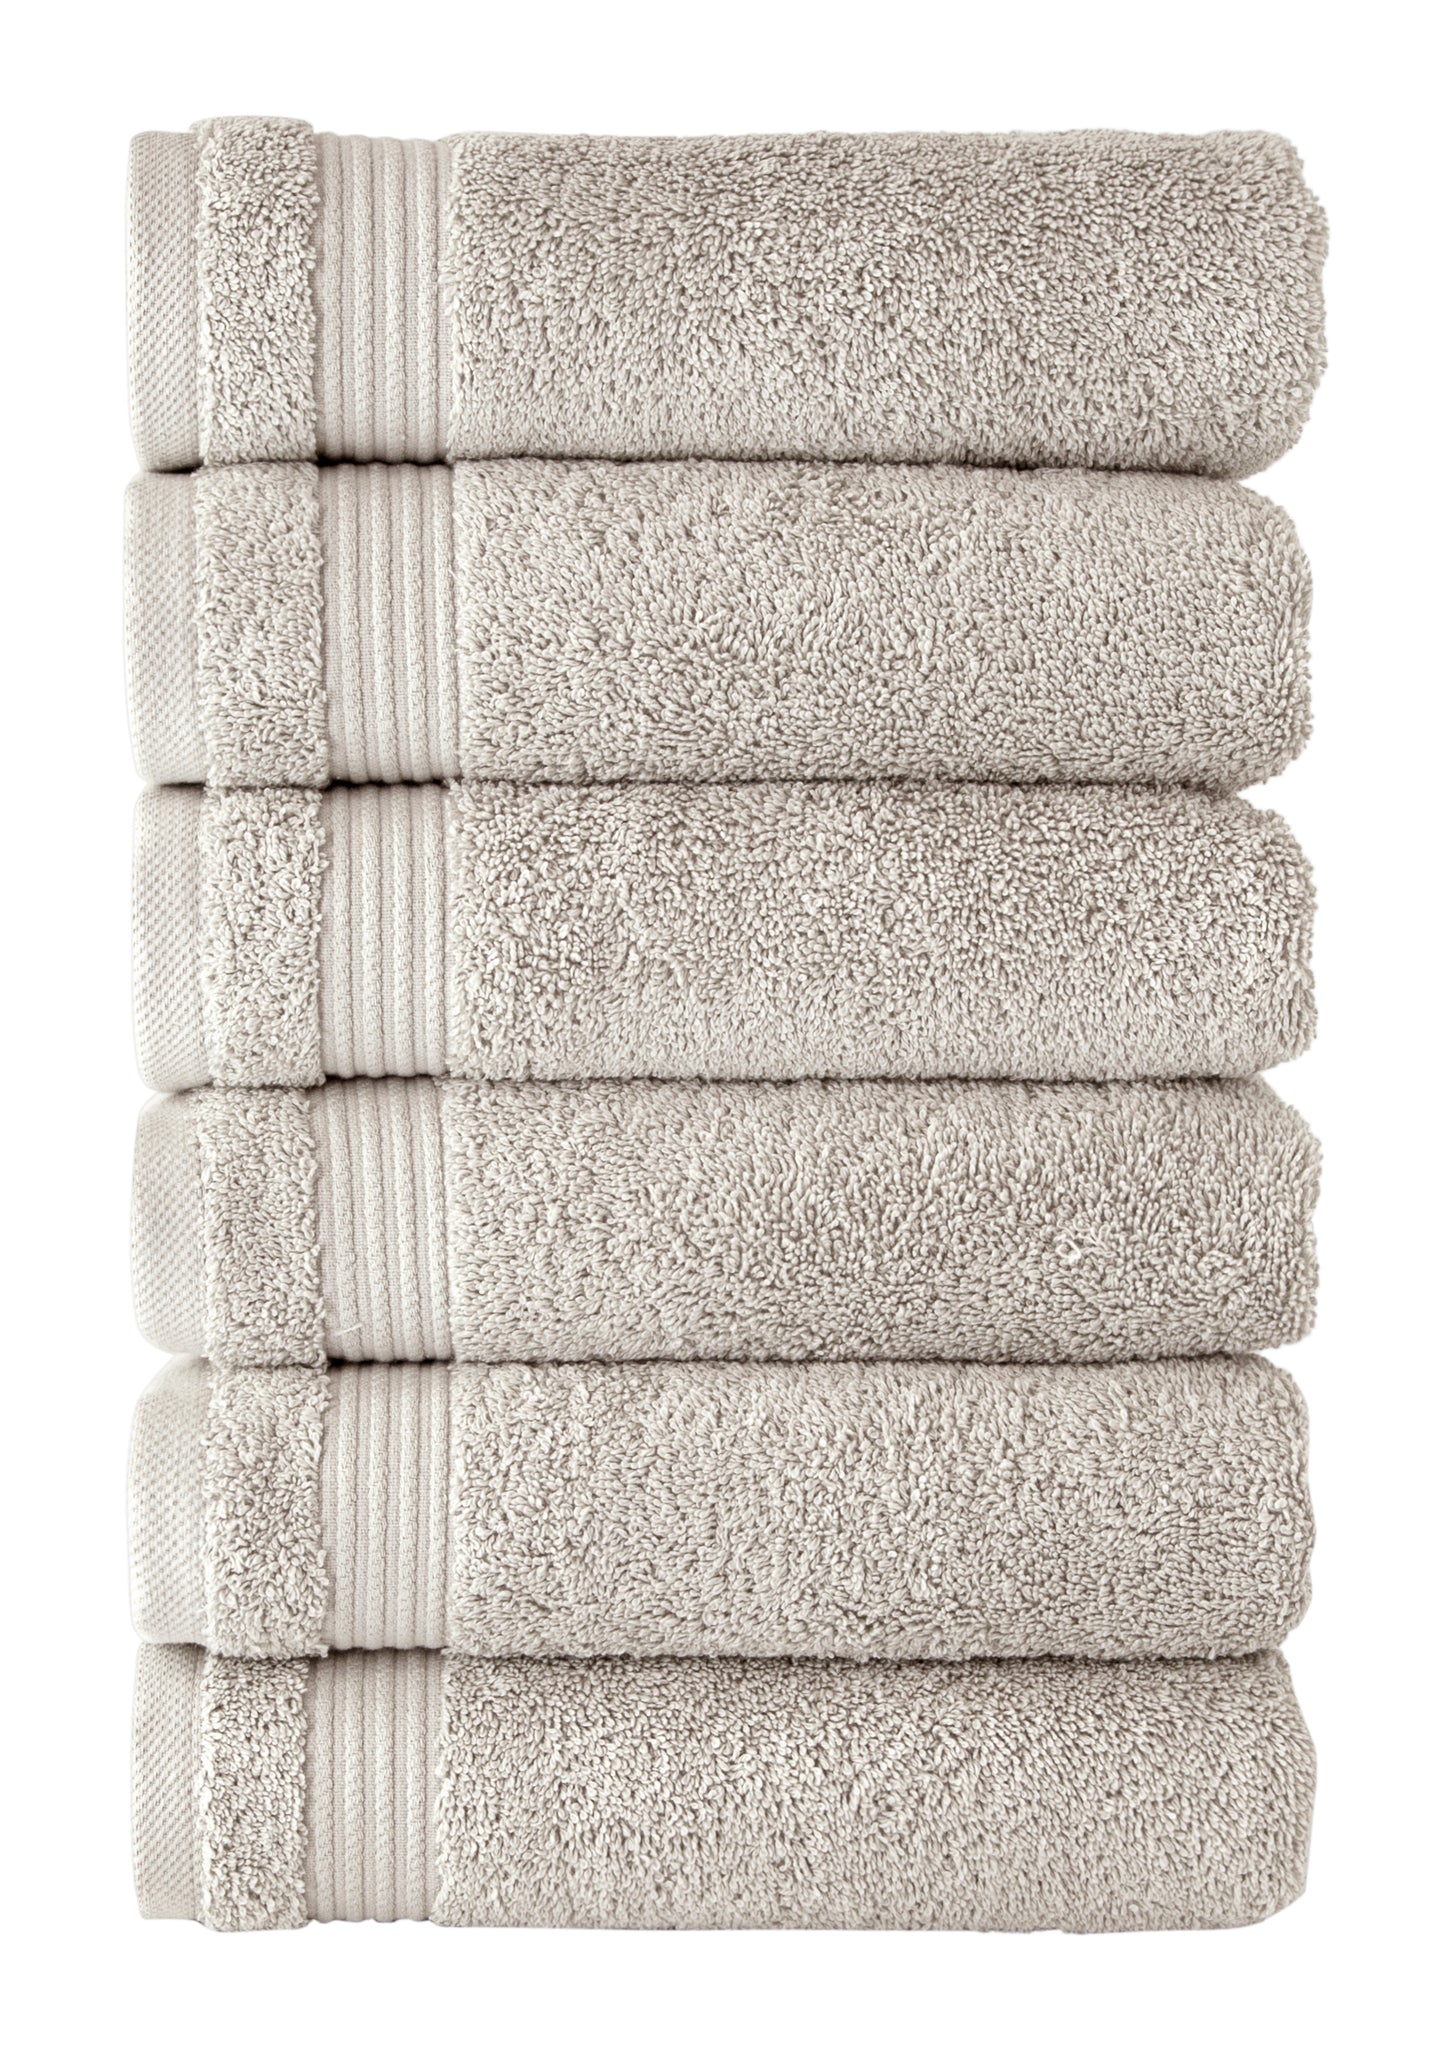 Amadeus Turkish Cotton Hand Towels - 6 Pieces - Classic Turkish Towels